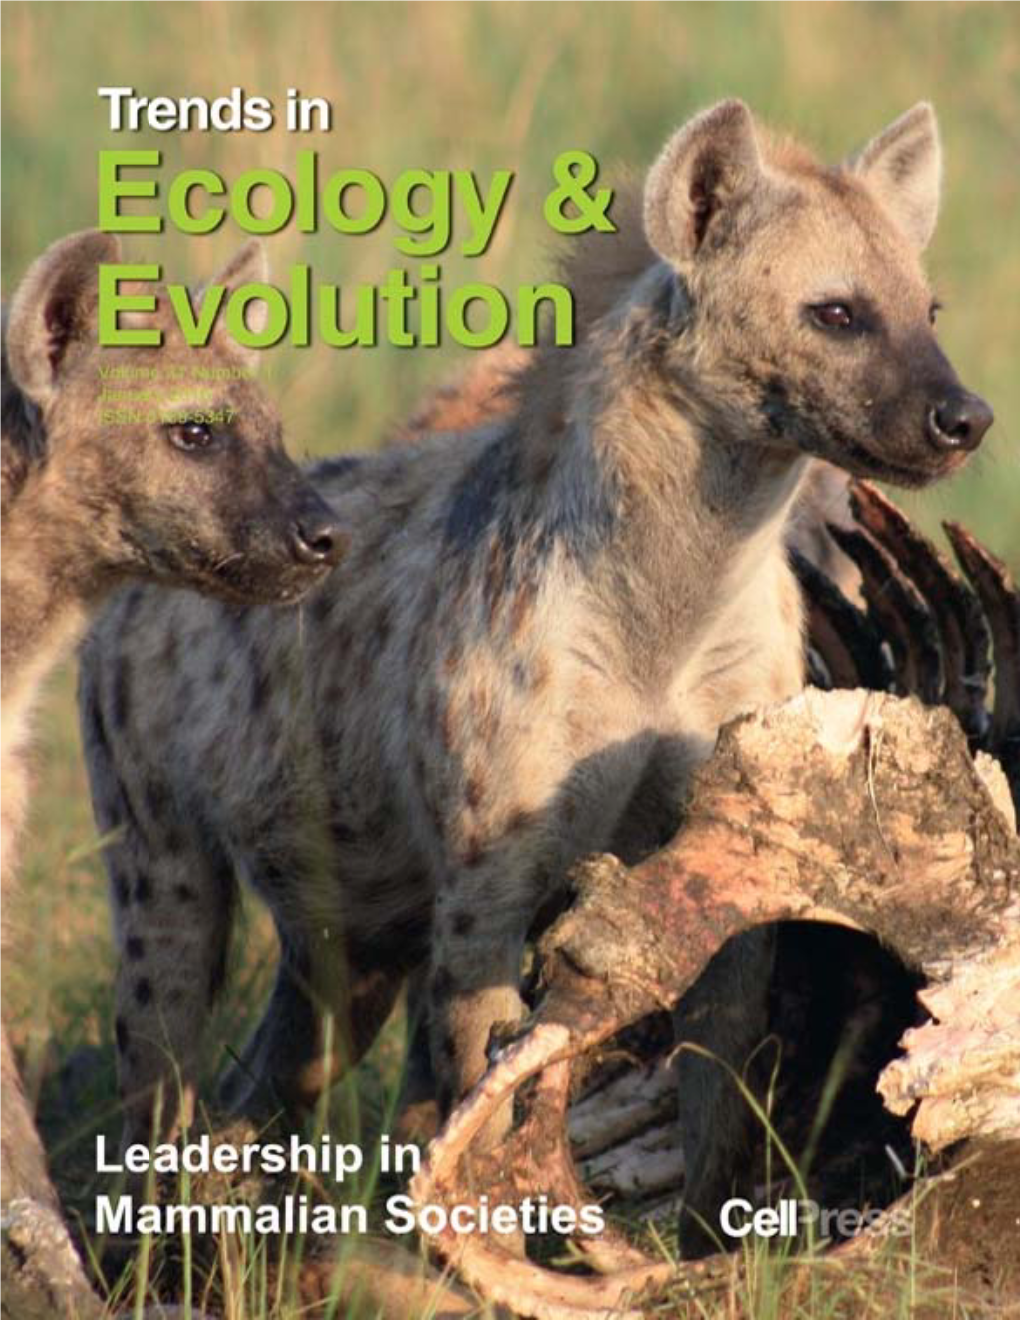 Leadership in Mammalian Societies